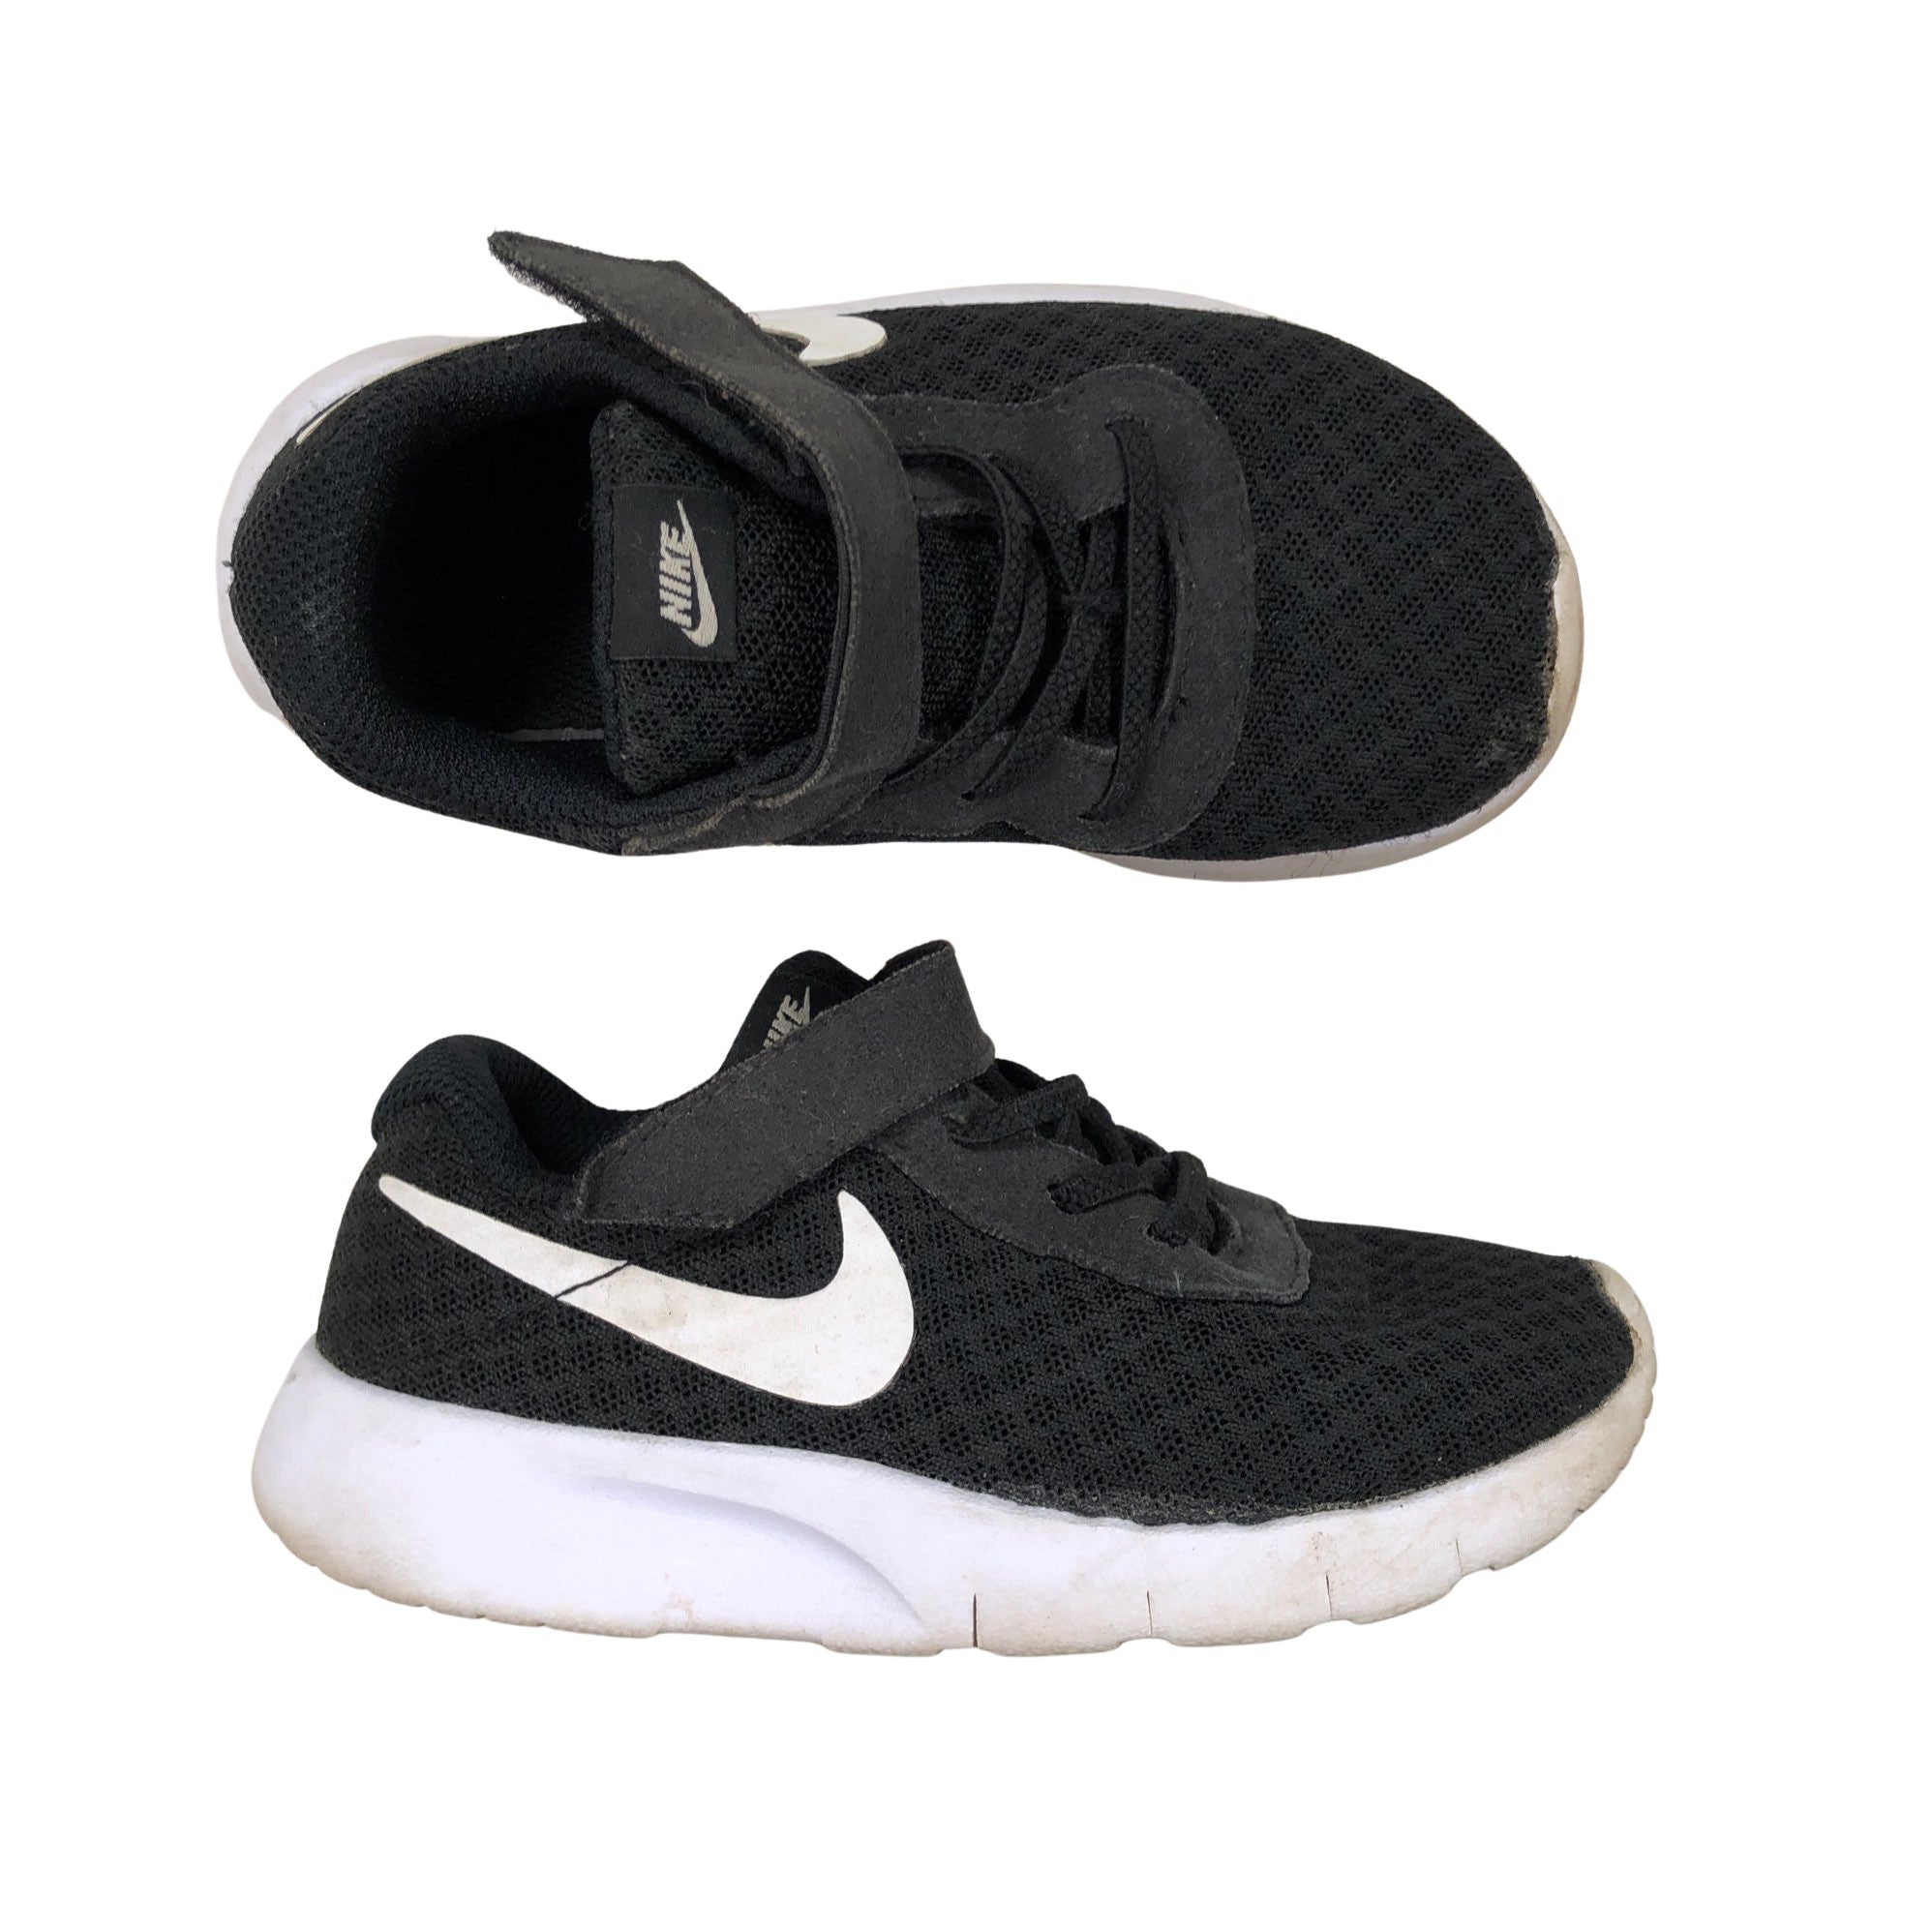 Unisex Nike Sneakers, size 26 (Black) |